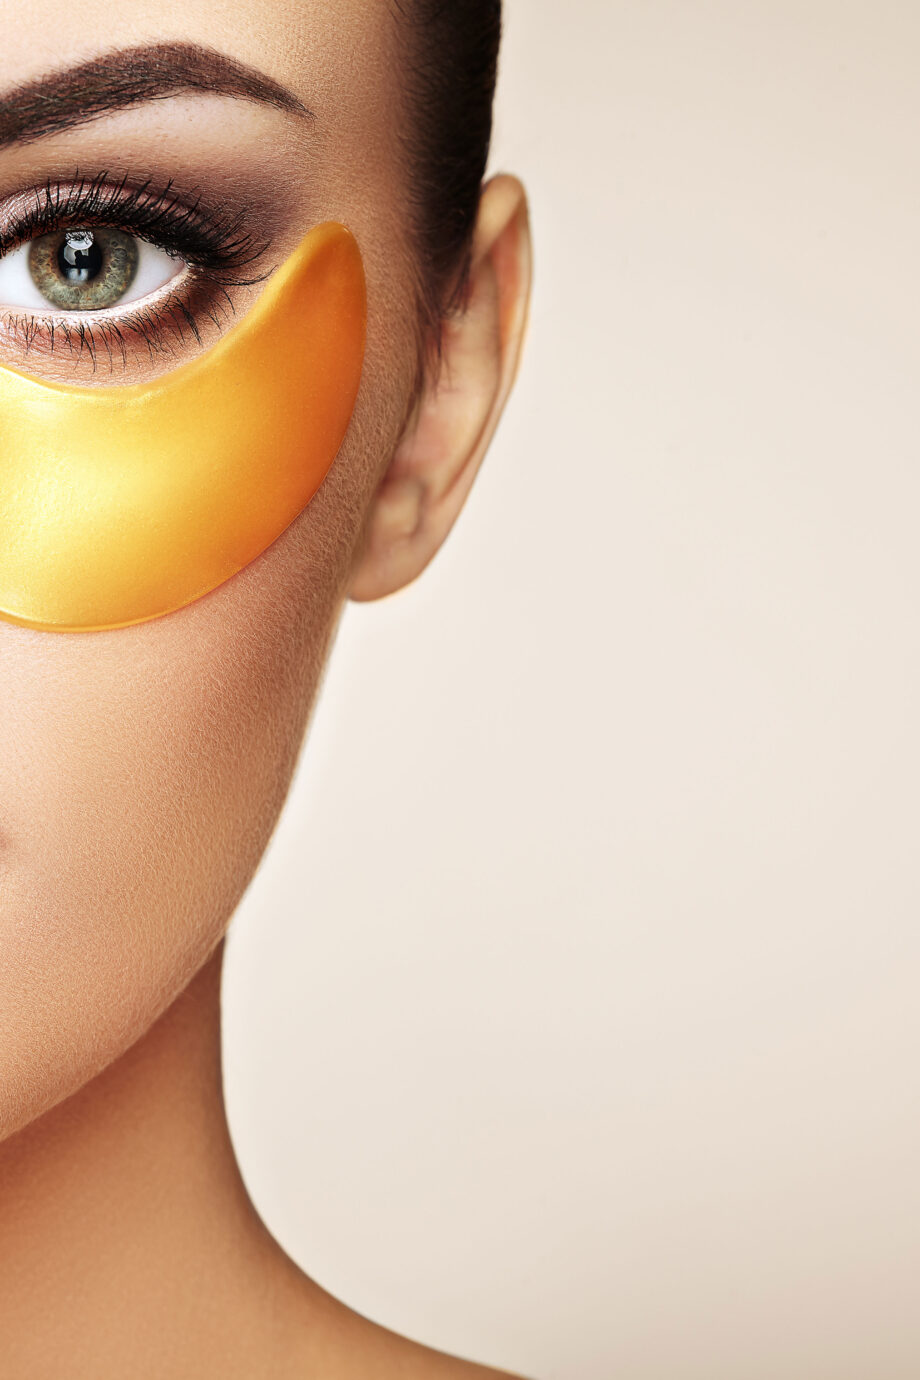 eye-pads-οι-πιο-αποτελεσματικές-μάσκες-ματιώ-88016